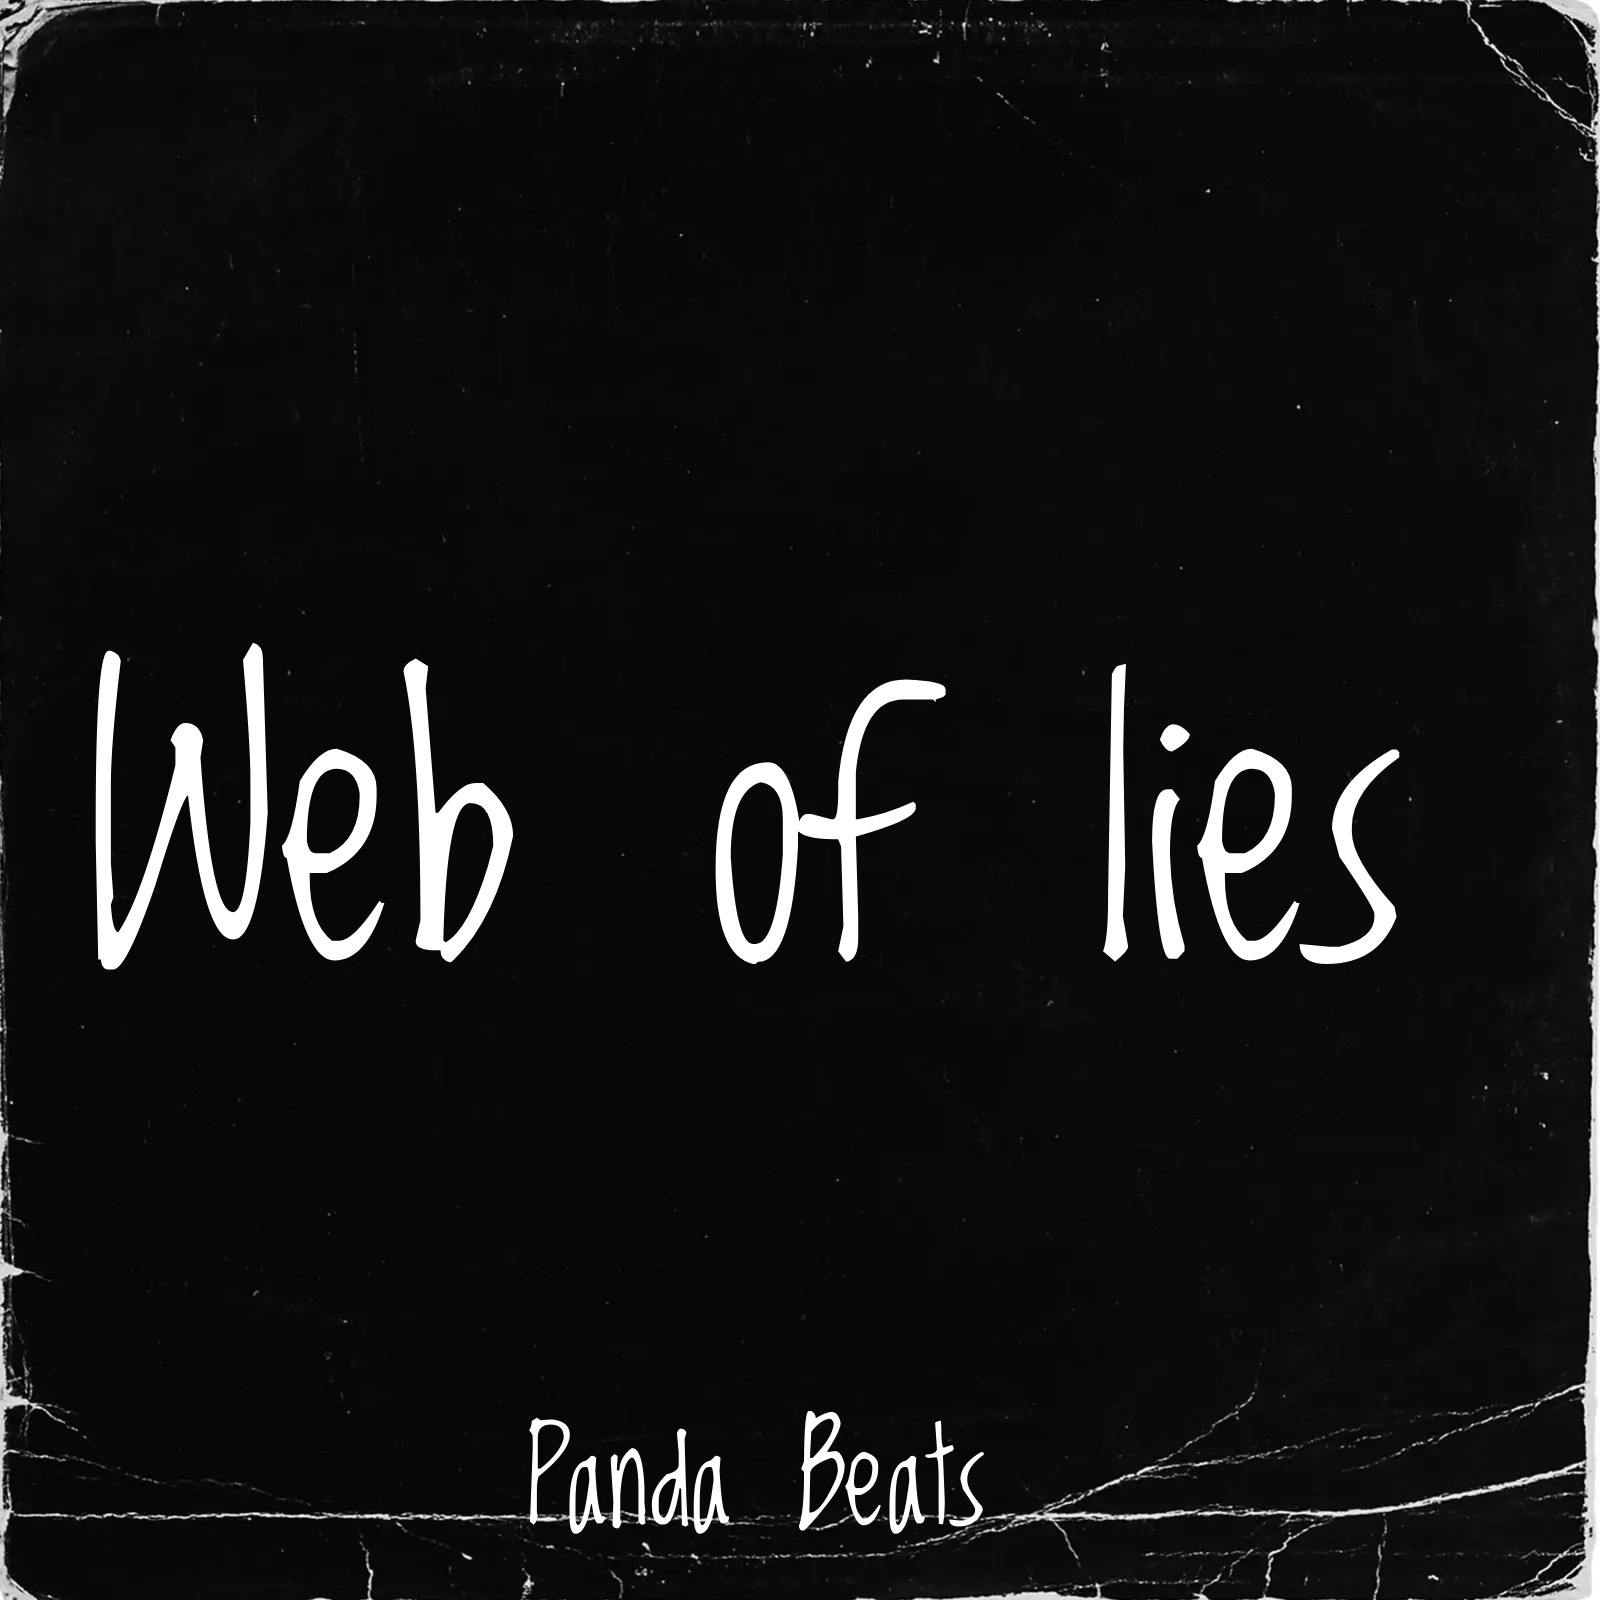 Web of Lies